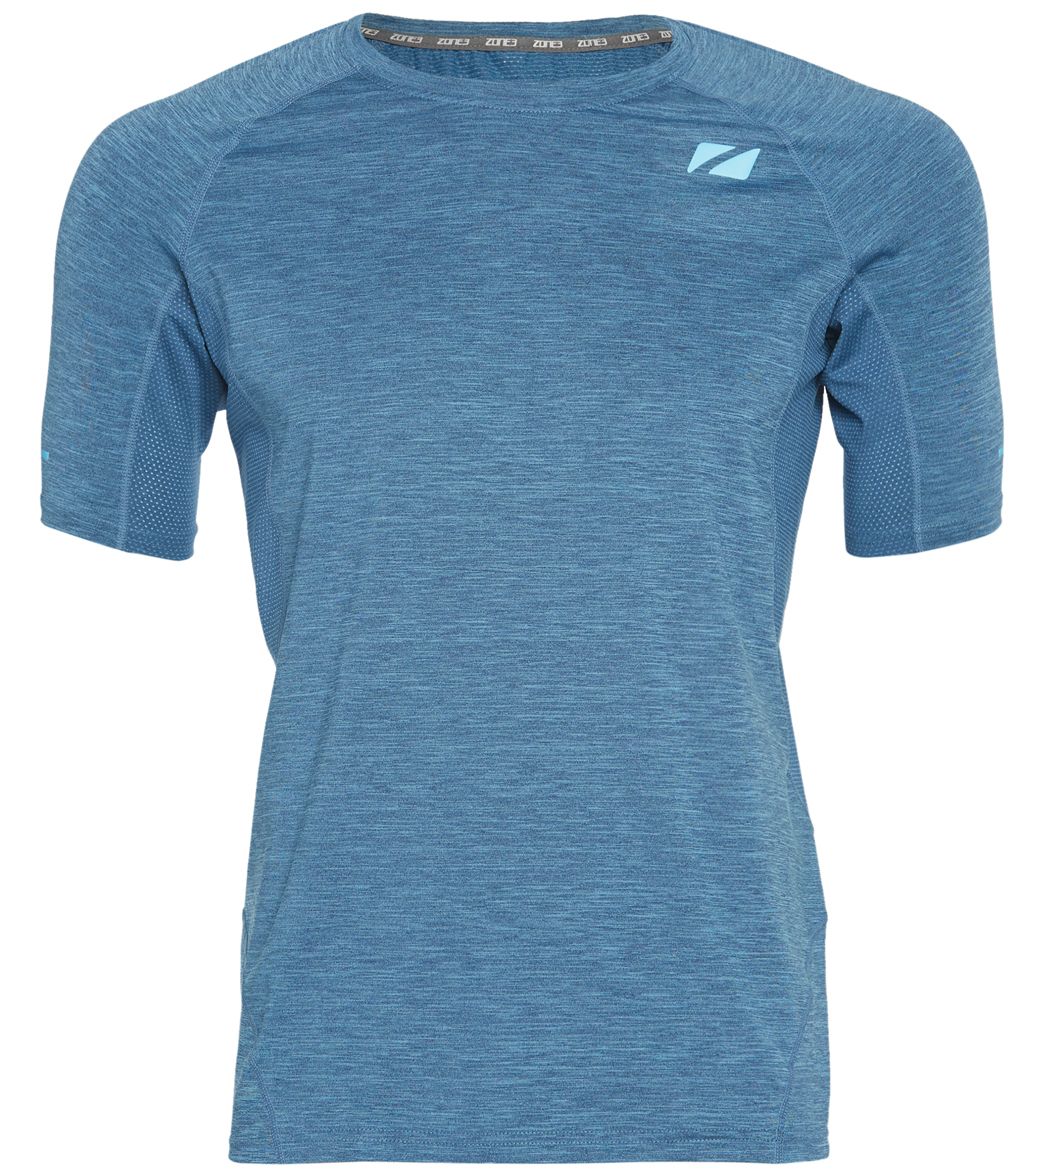 Zone3 Men's Compression Power Burst Short Sleeve Shirt - Royal Blue/Sky Blue Large - Swimoutlet.com